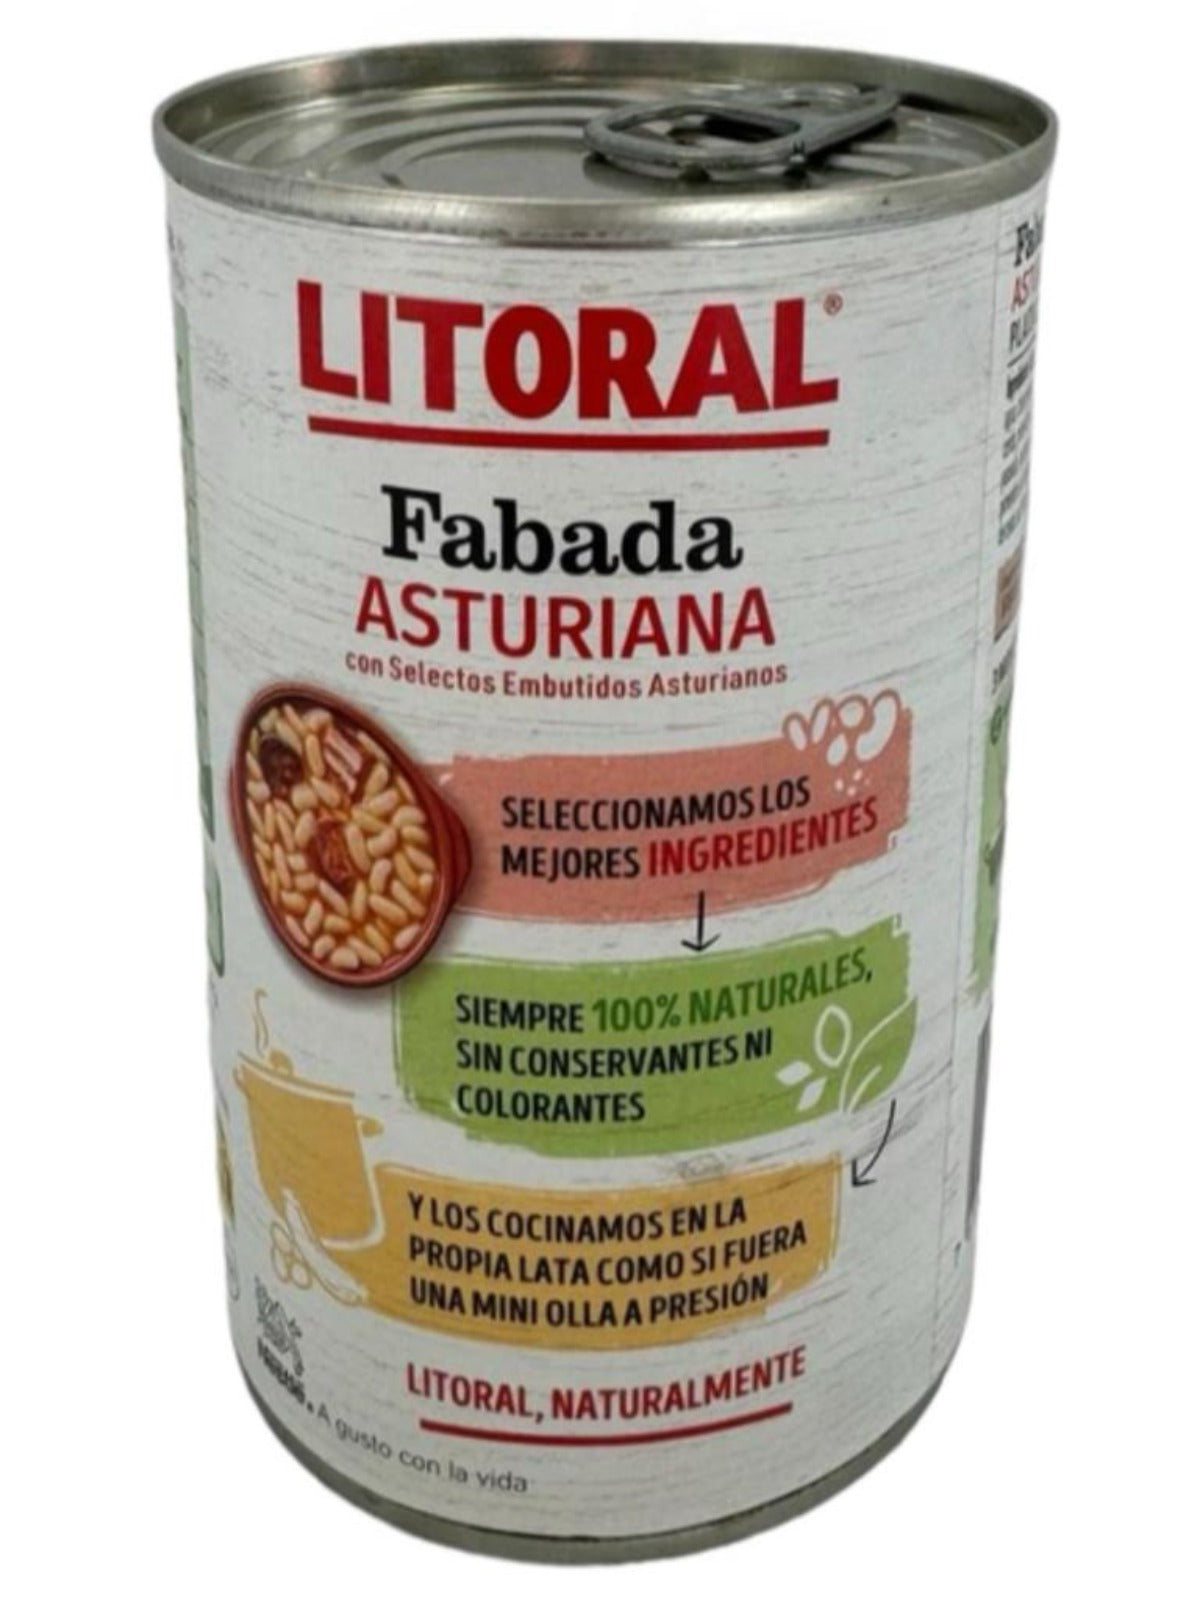 Litoral Fabada Asturiana 420g